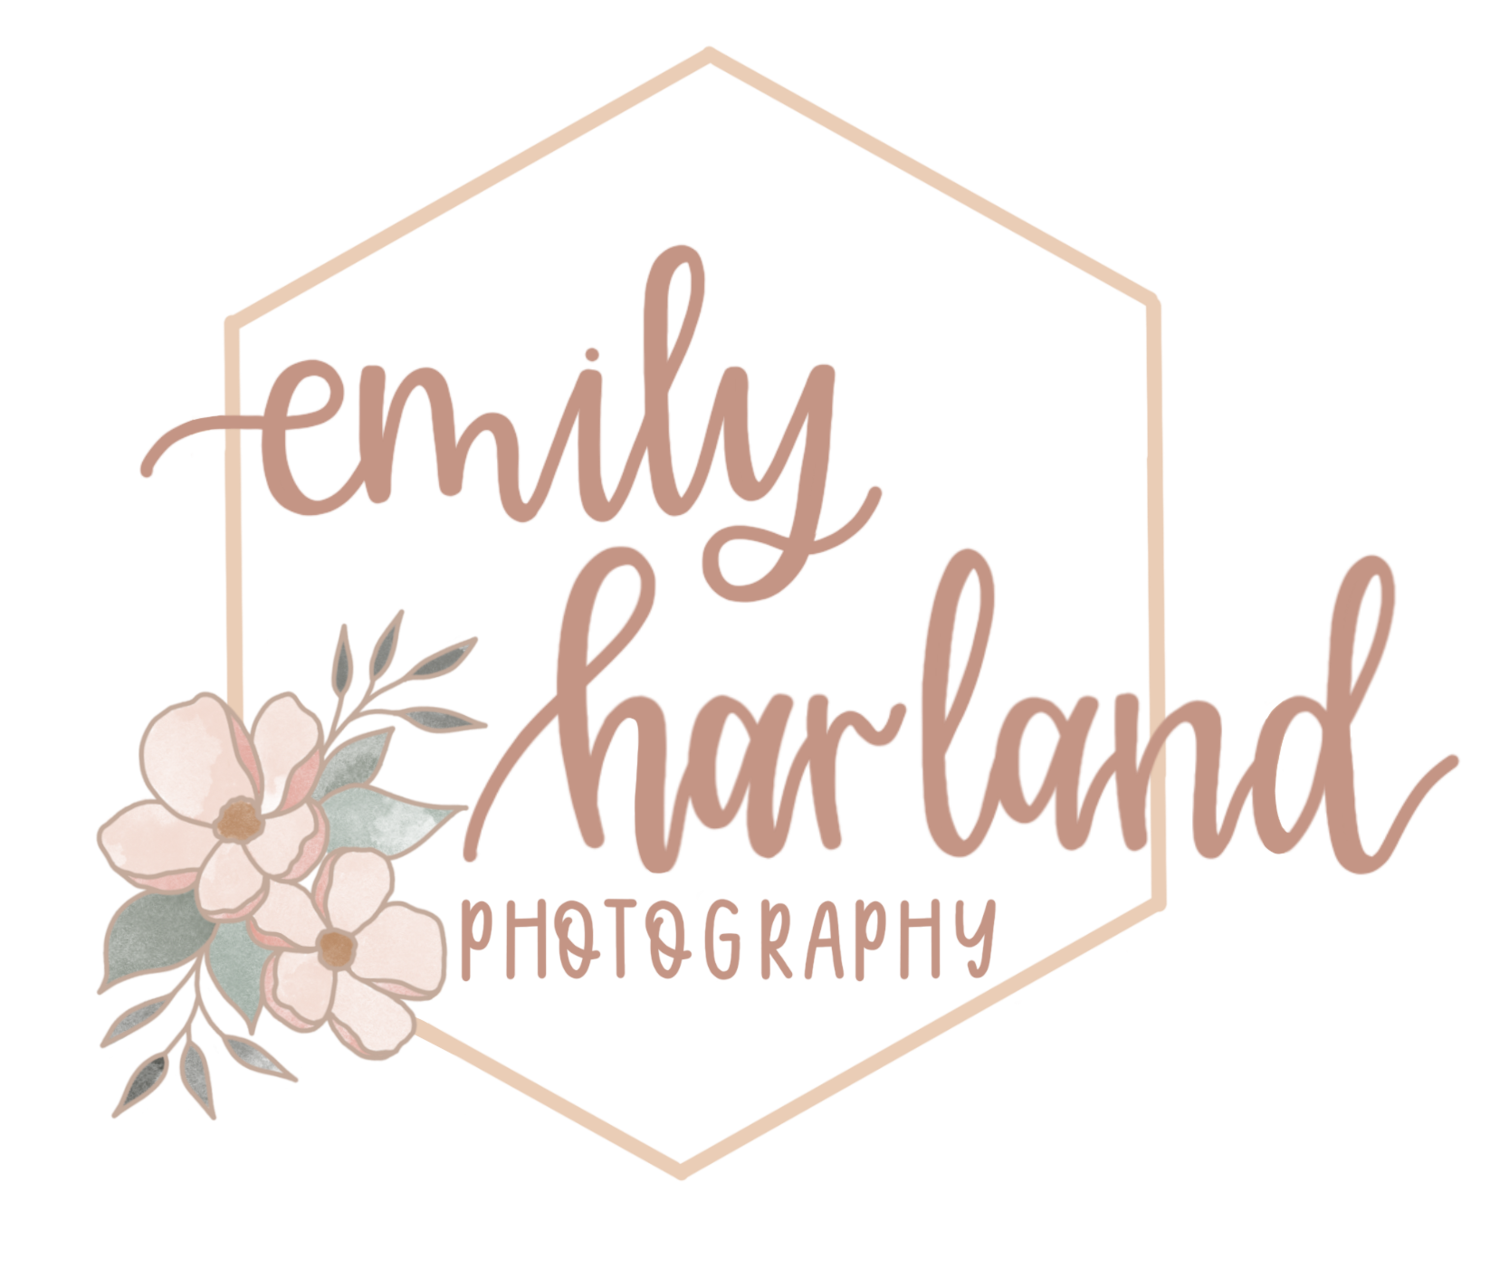 Emily Harland Photography